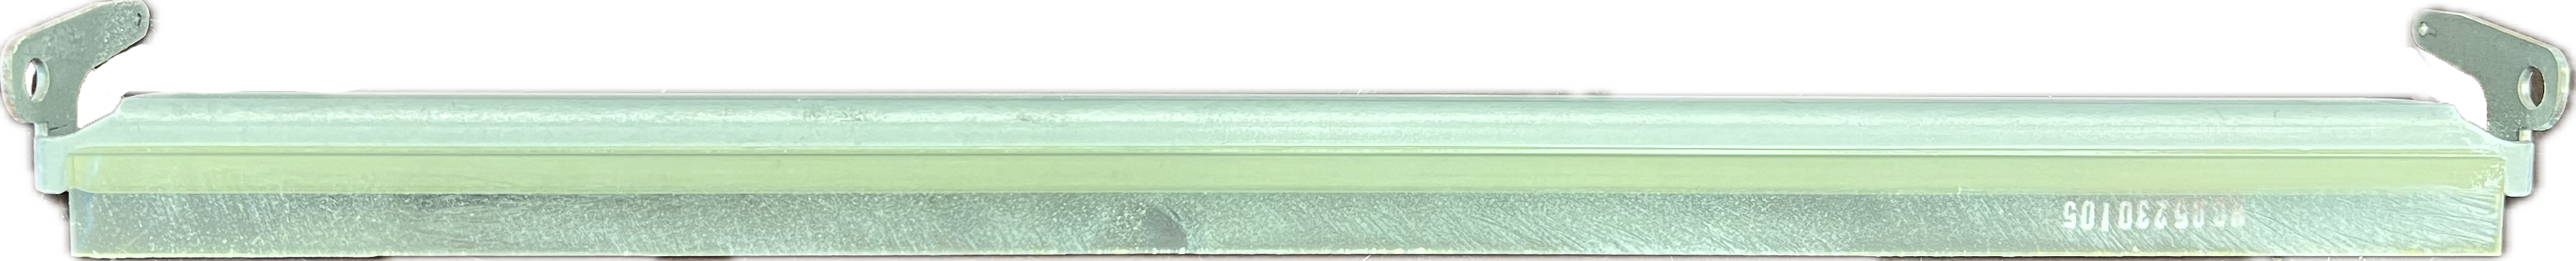 Konica Minolta Cleaning Blade | A03U553000